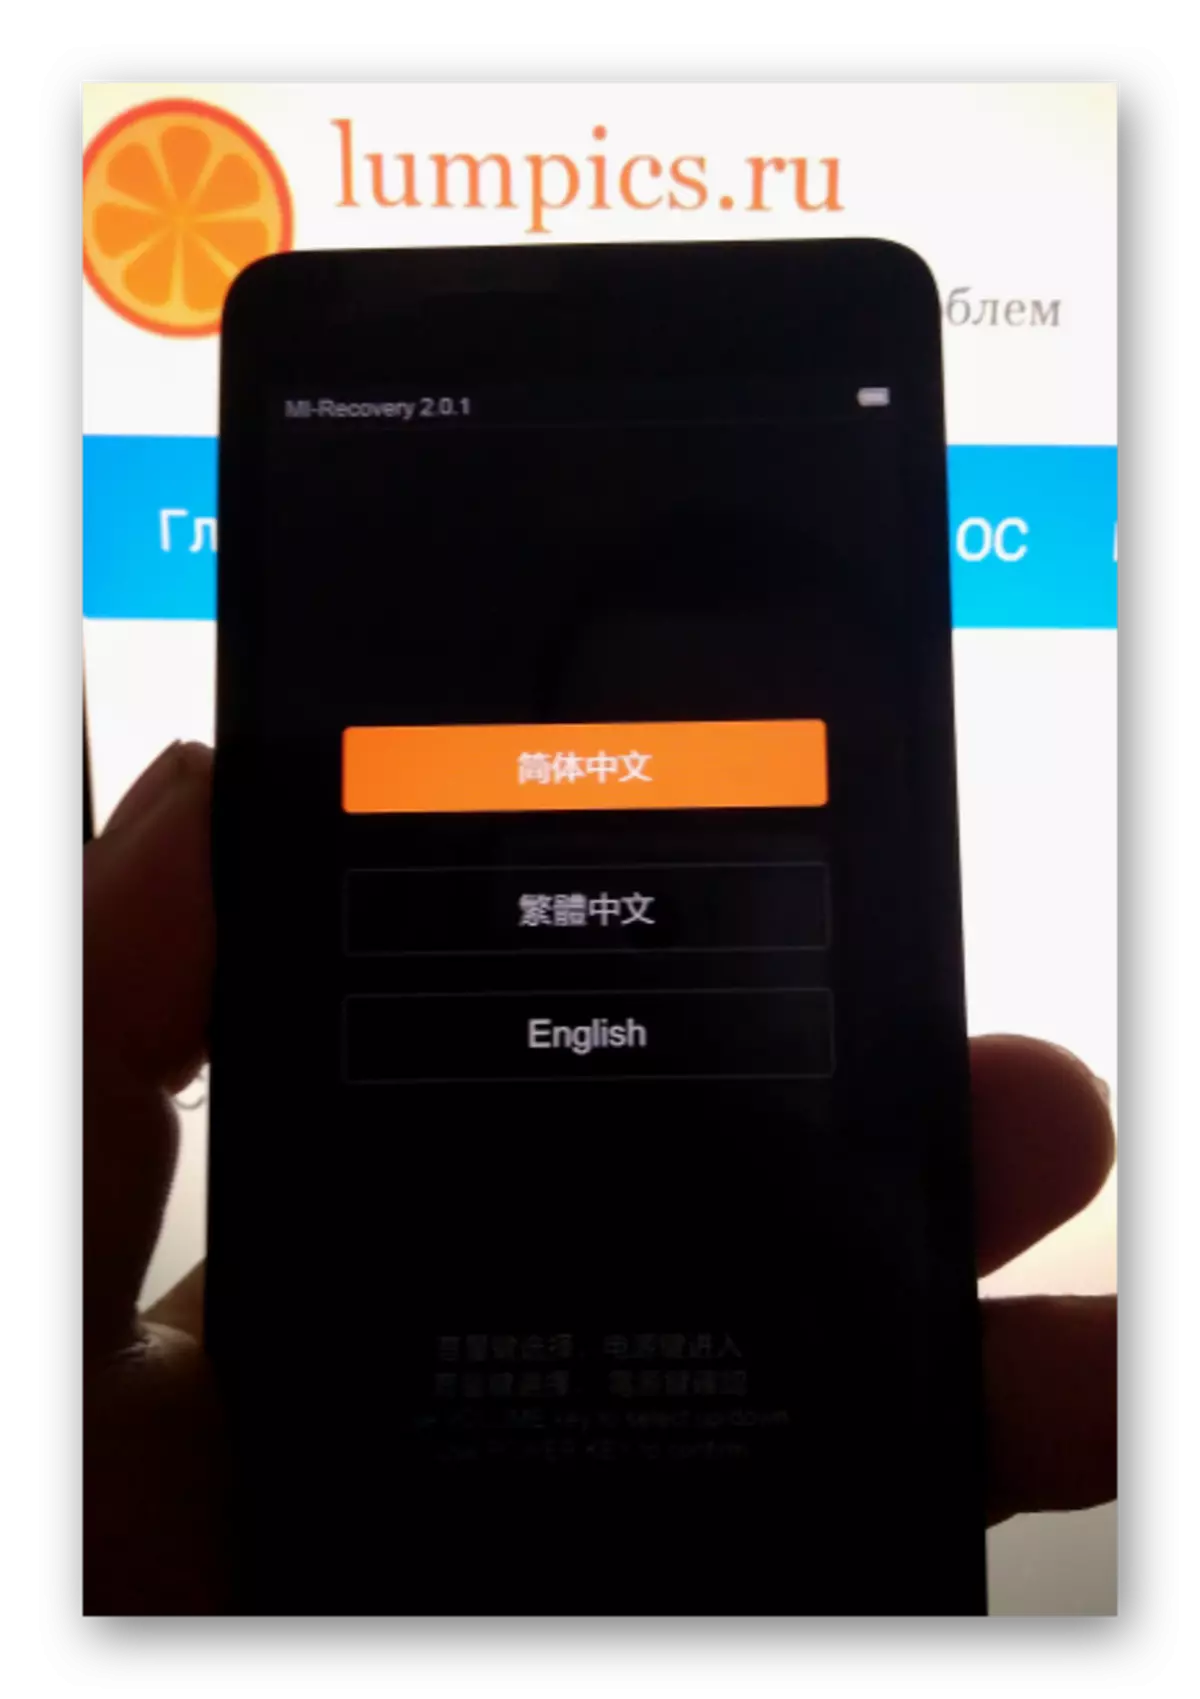 Recuperación de fábrica Xiaomi Redmi 2